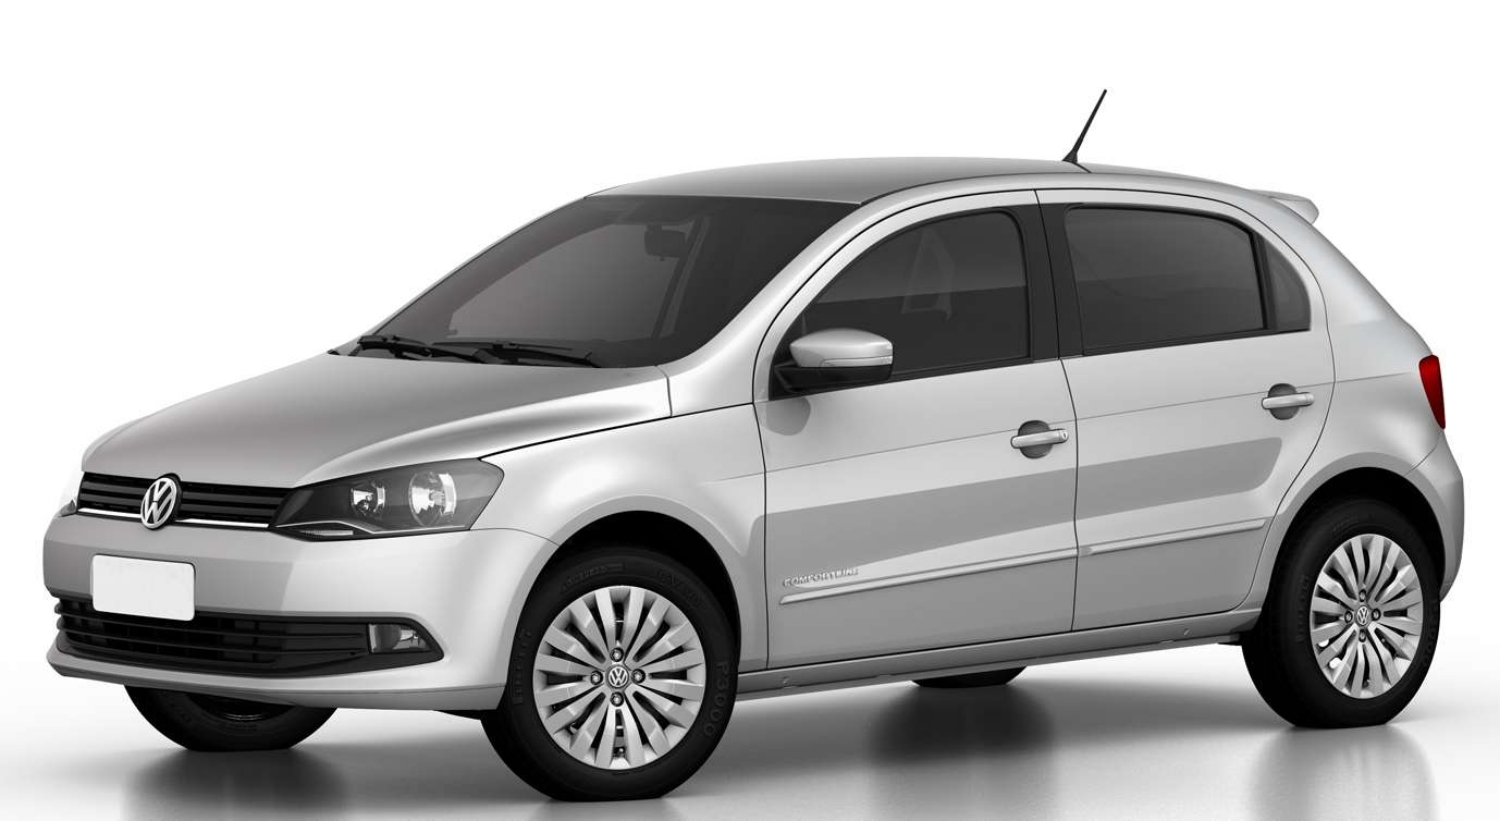 Recall: Volks vai chamar Fox, Gol e outros 5 modelos por 'airbags